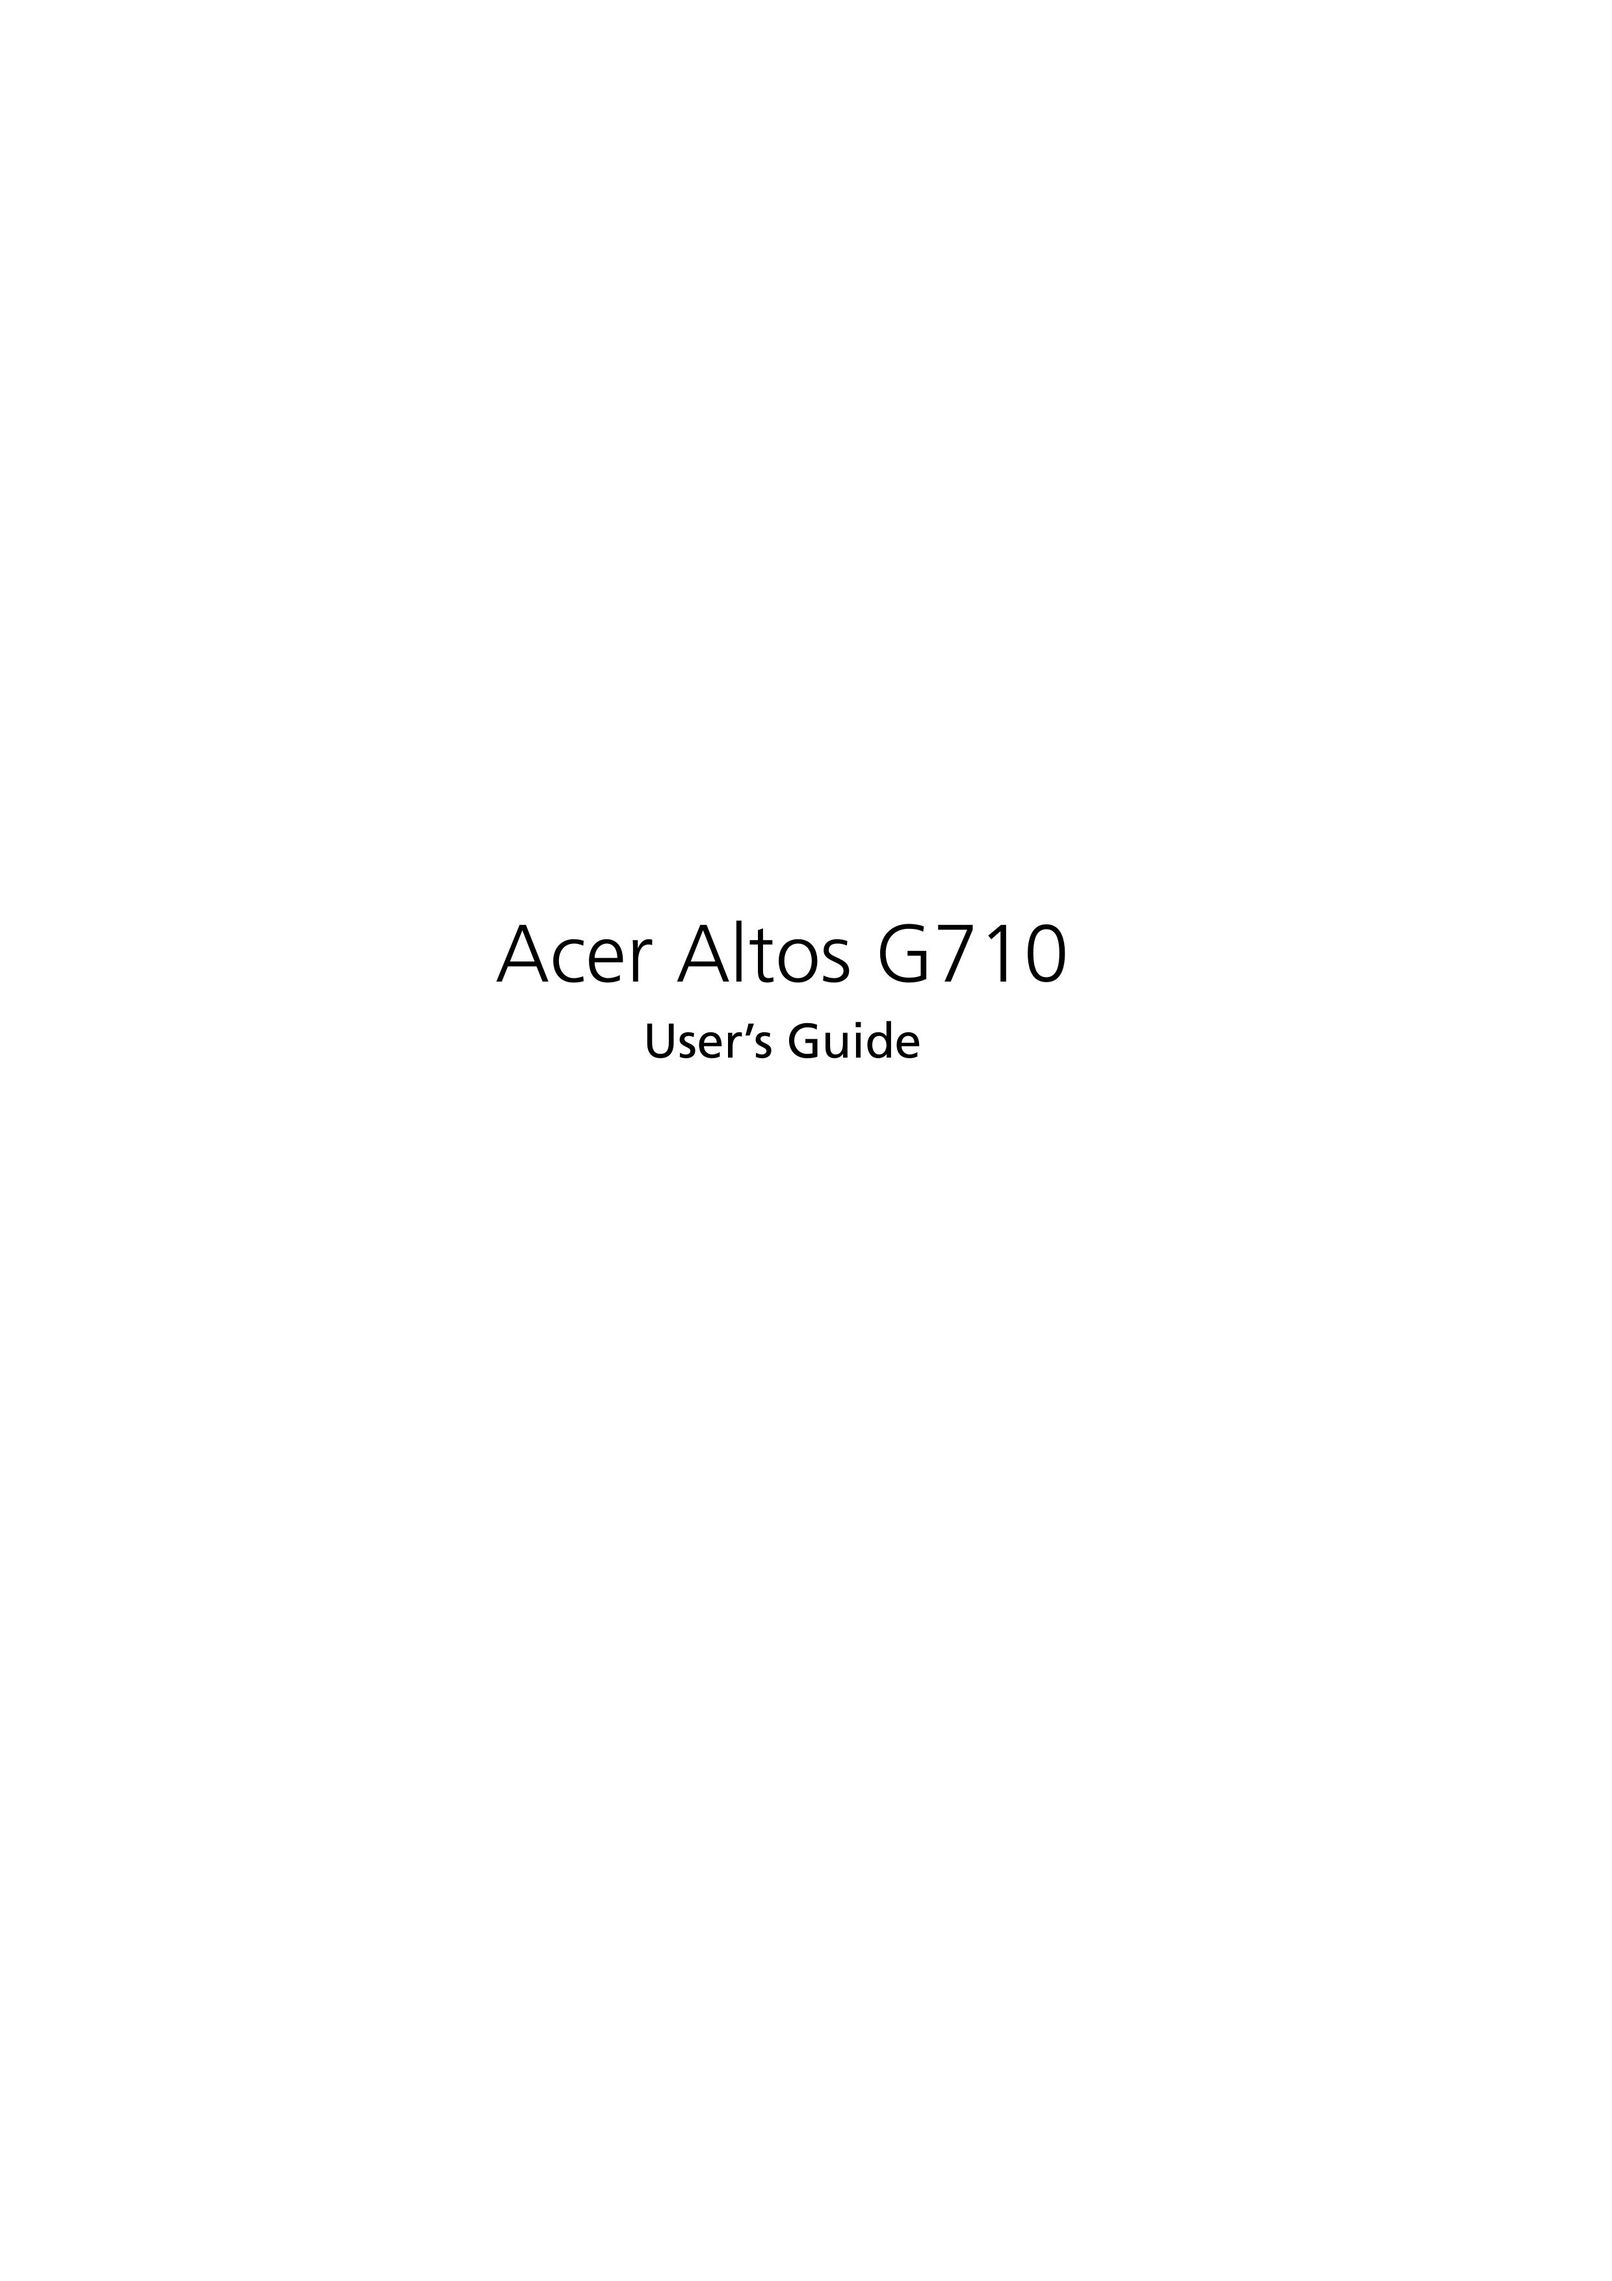 Acer Altos G710 Personal Computer User Manual